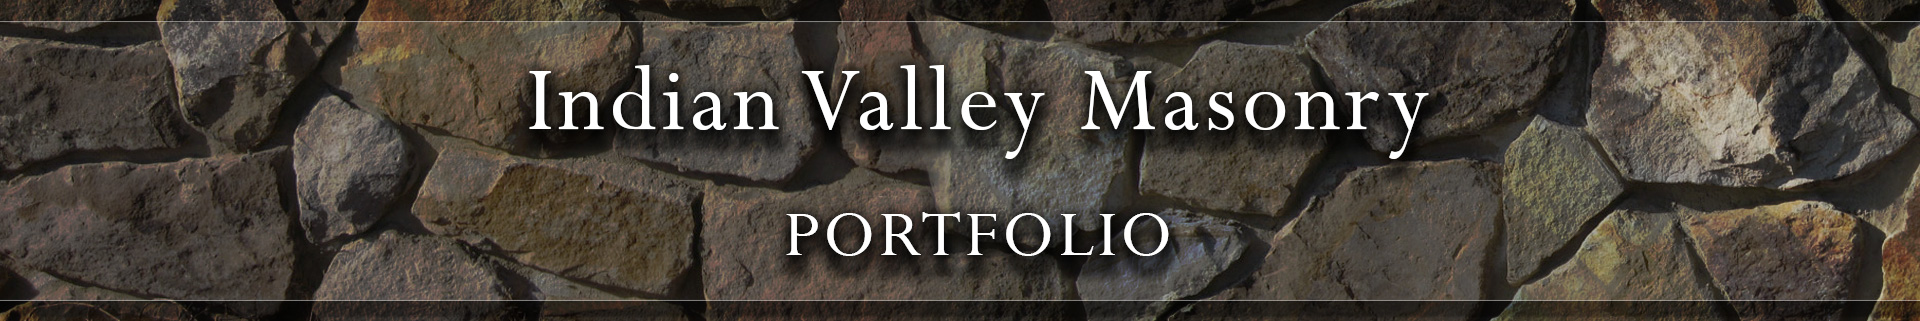 Indian Valley Masonry Portfolio